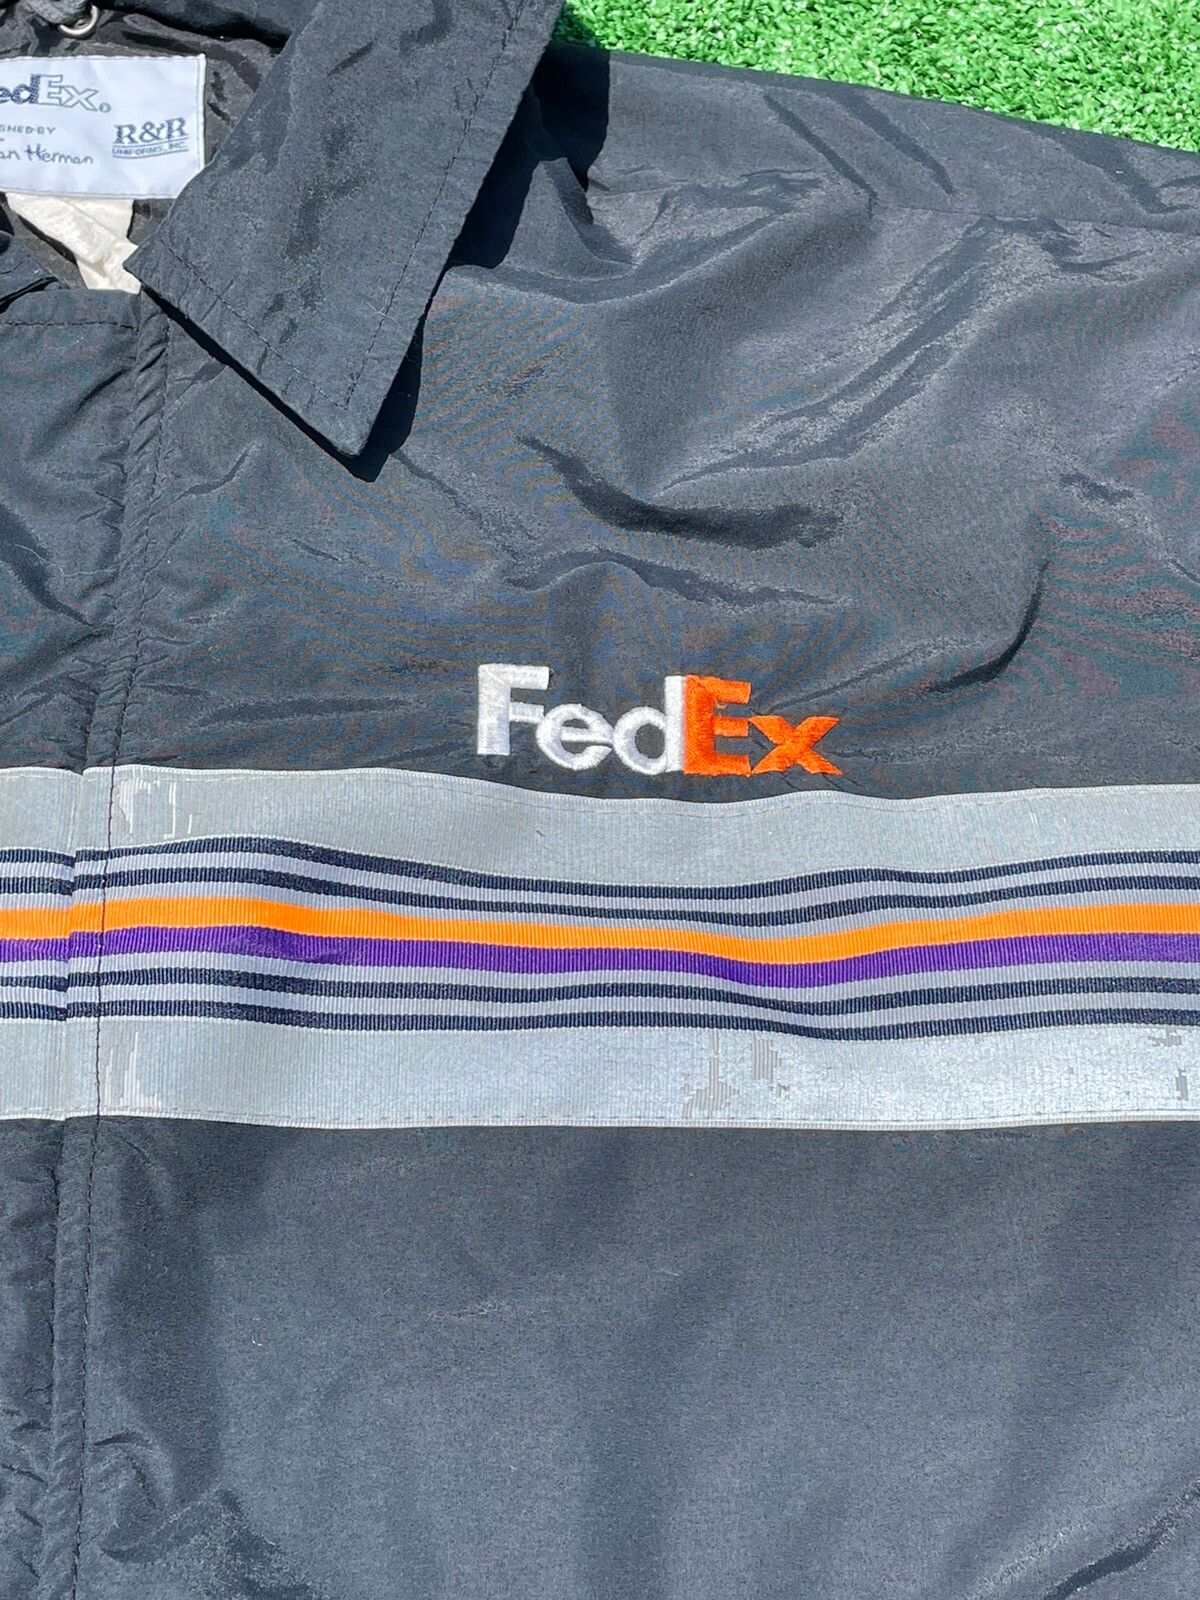 Vintage Vintage FedEx Delivery Driver Jacket Size US L / EU 52-54 / 3 - 2 Preview